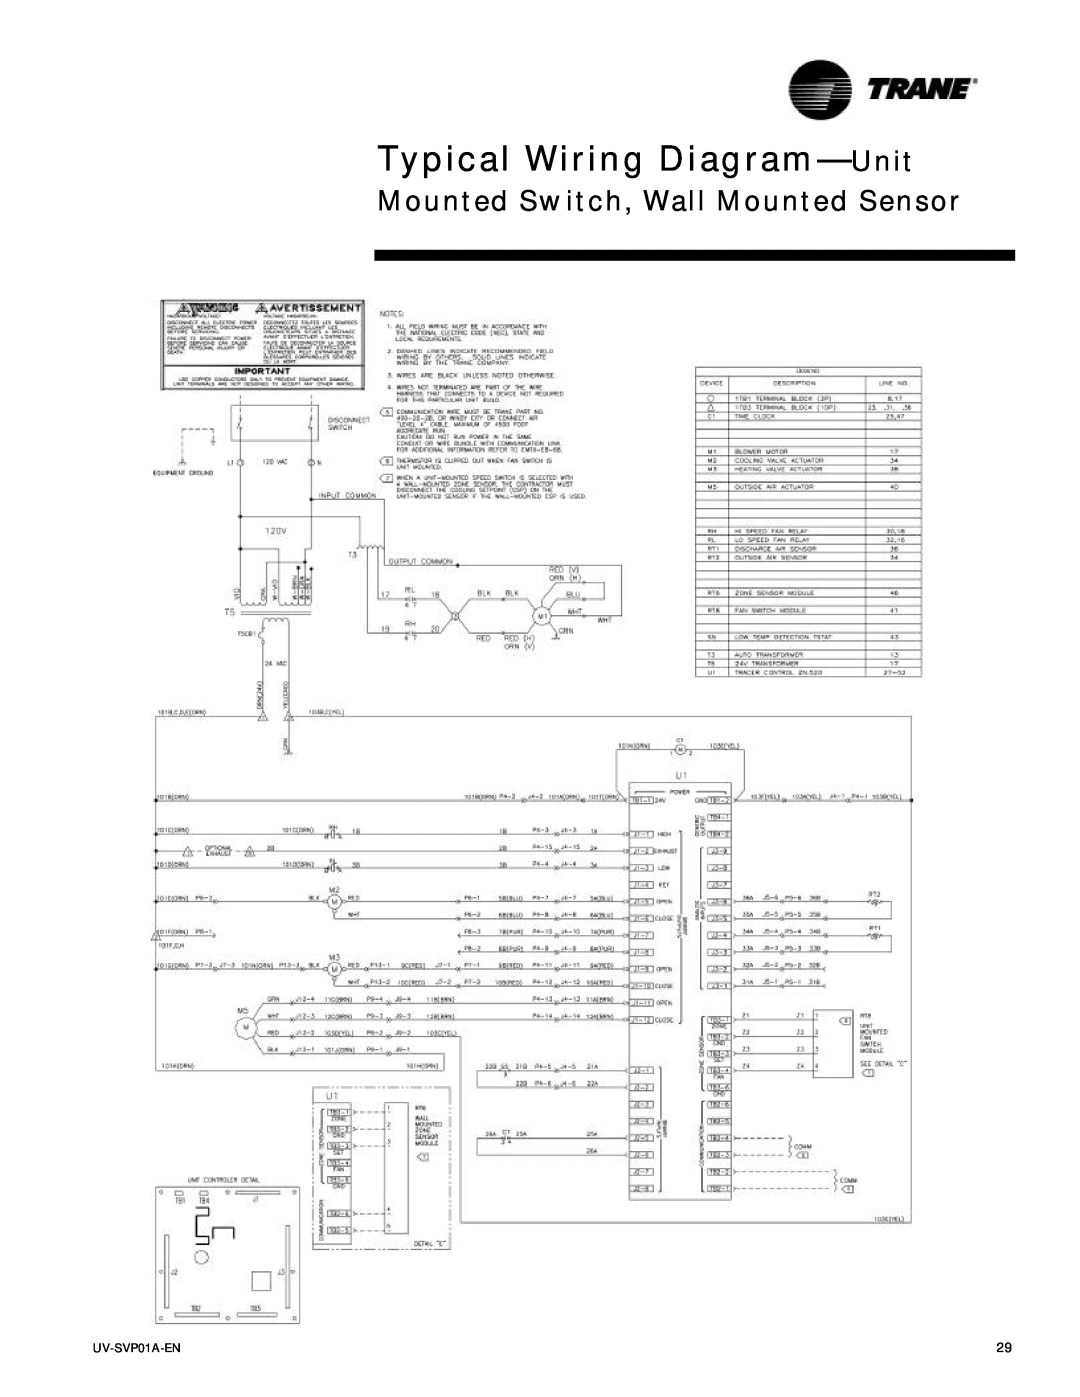 Trane ZN.520, Tracer Unit Ventilator manual Typical Wiring Diagram-Unit, Mounted Switch, Wall Mounted Sensor, UV-SVP01A-EN 